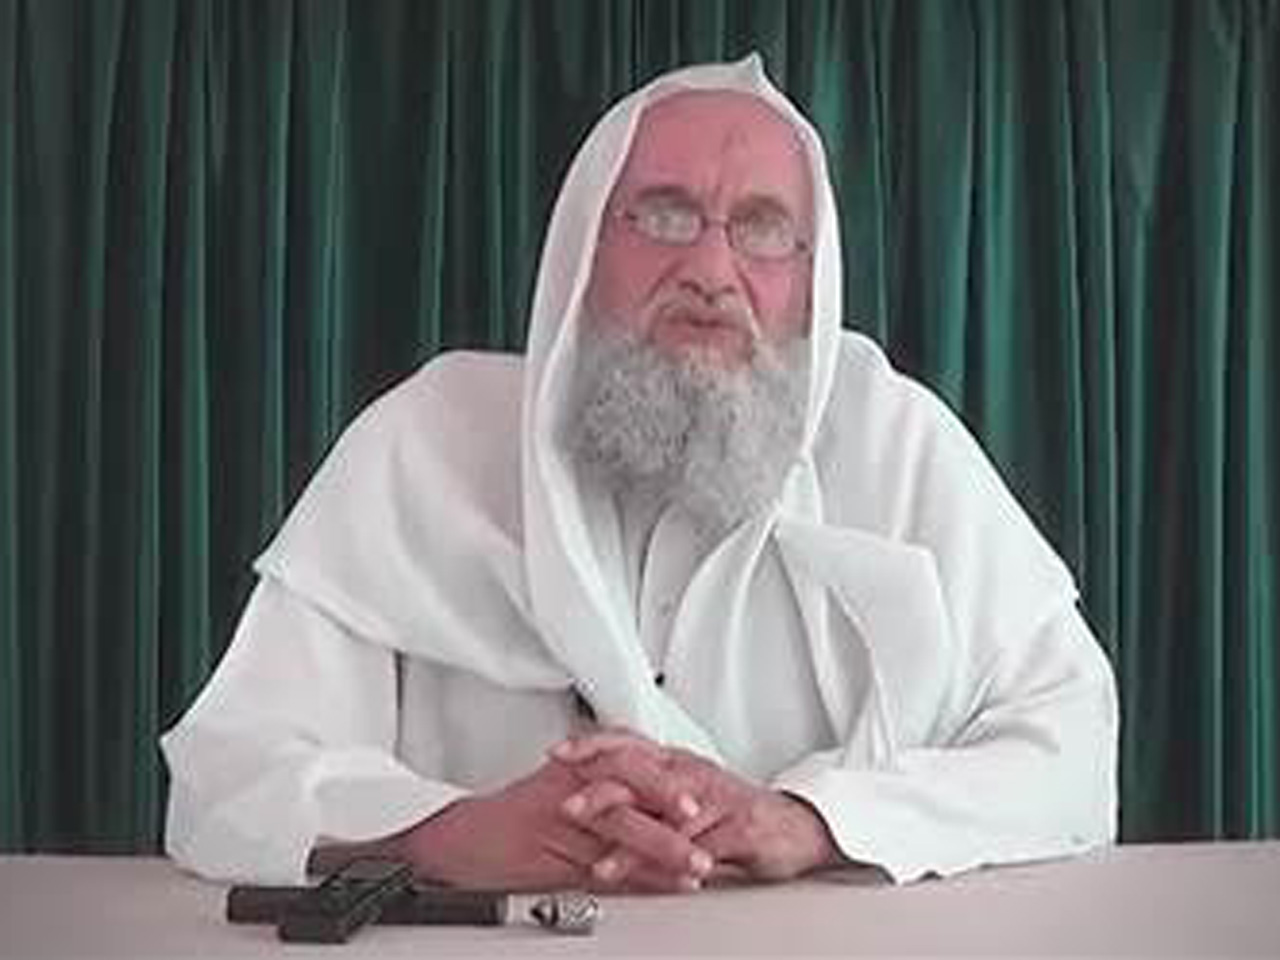 Al-Qaeda leader Ayman al-Zawahiri has released a video 